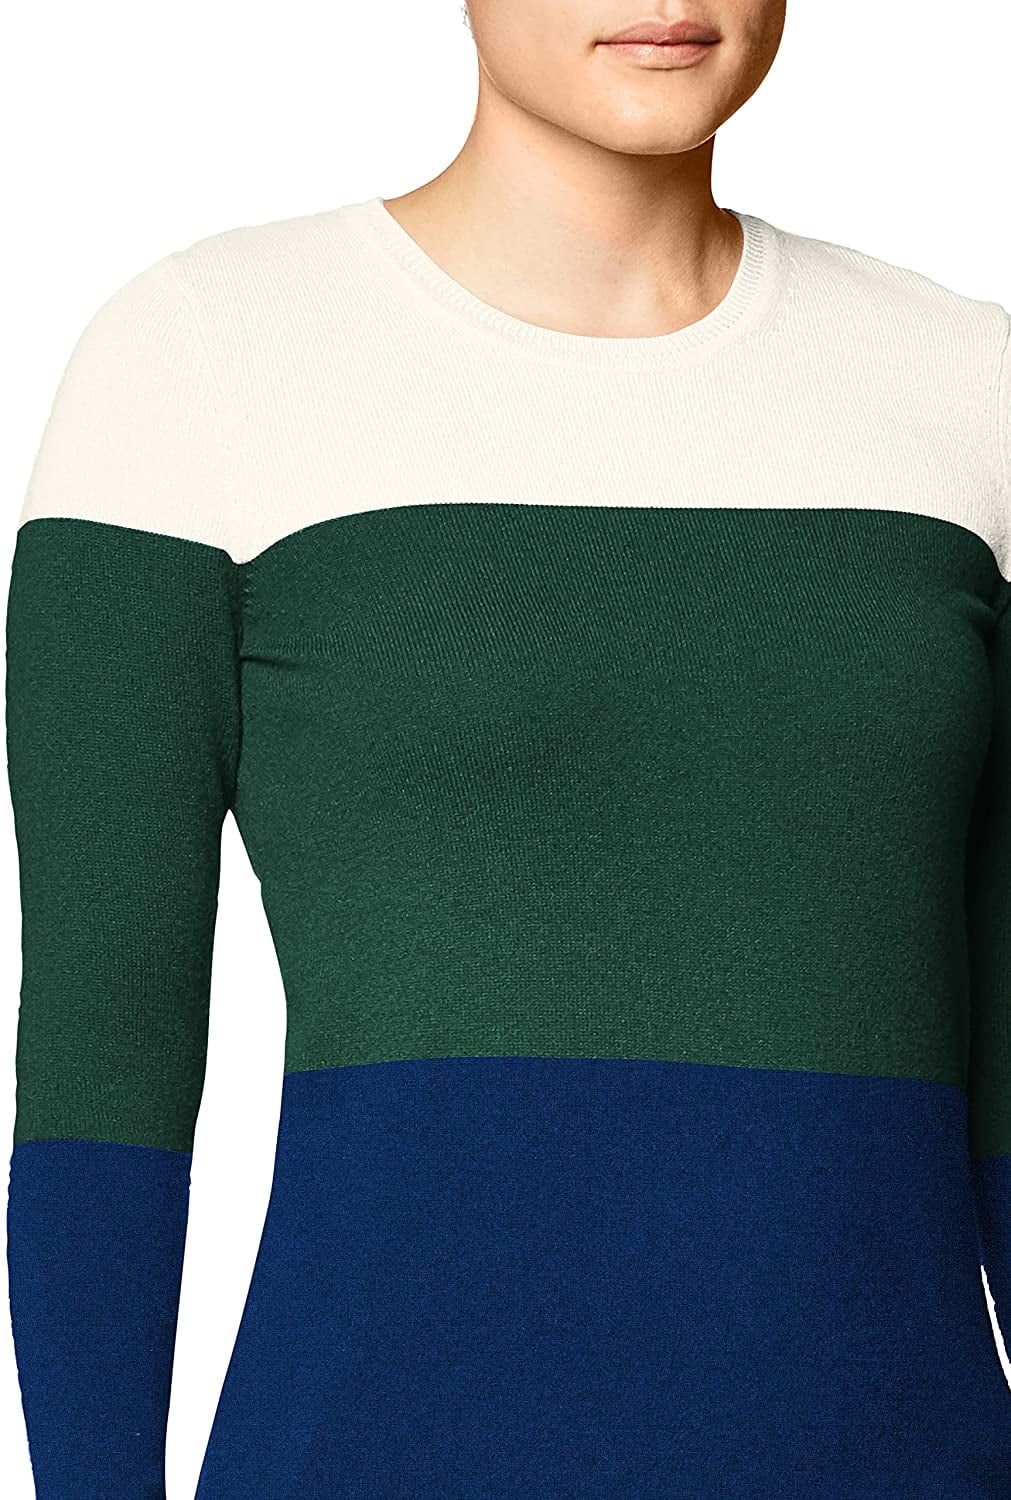 Women s Crewneck Pullover Cashmere Sweater Ivory Bottle Green Navy Medium -  Walmart.com